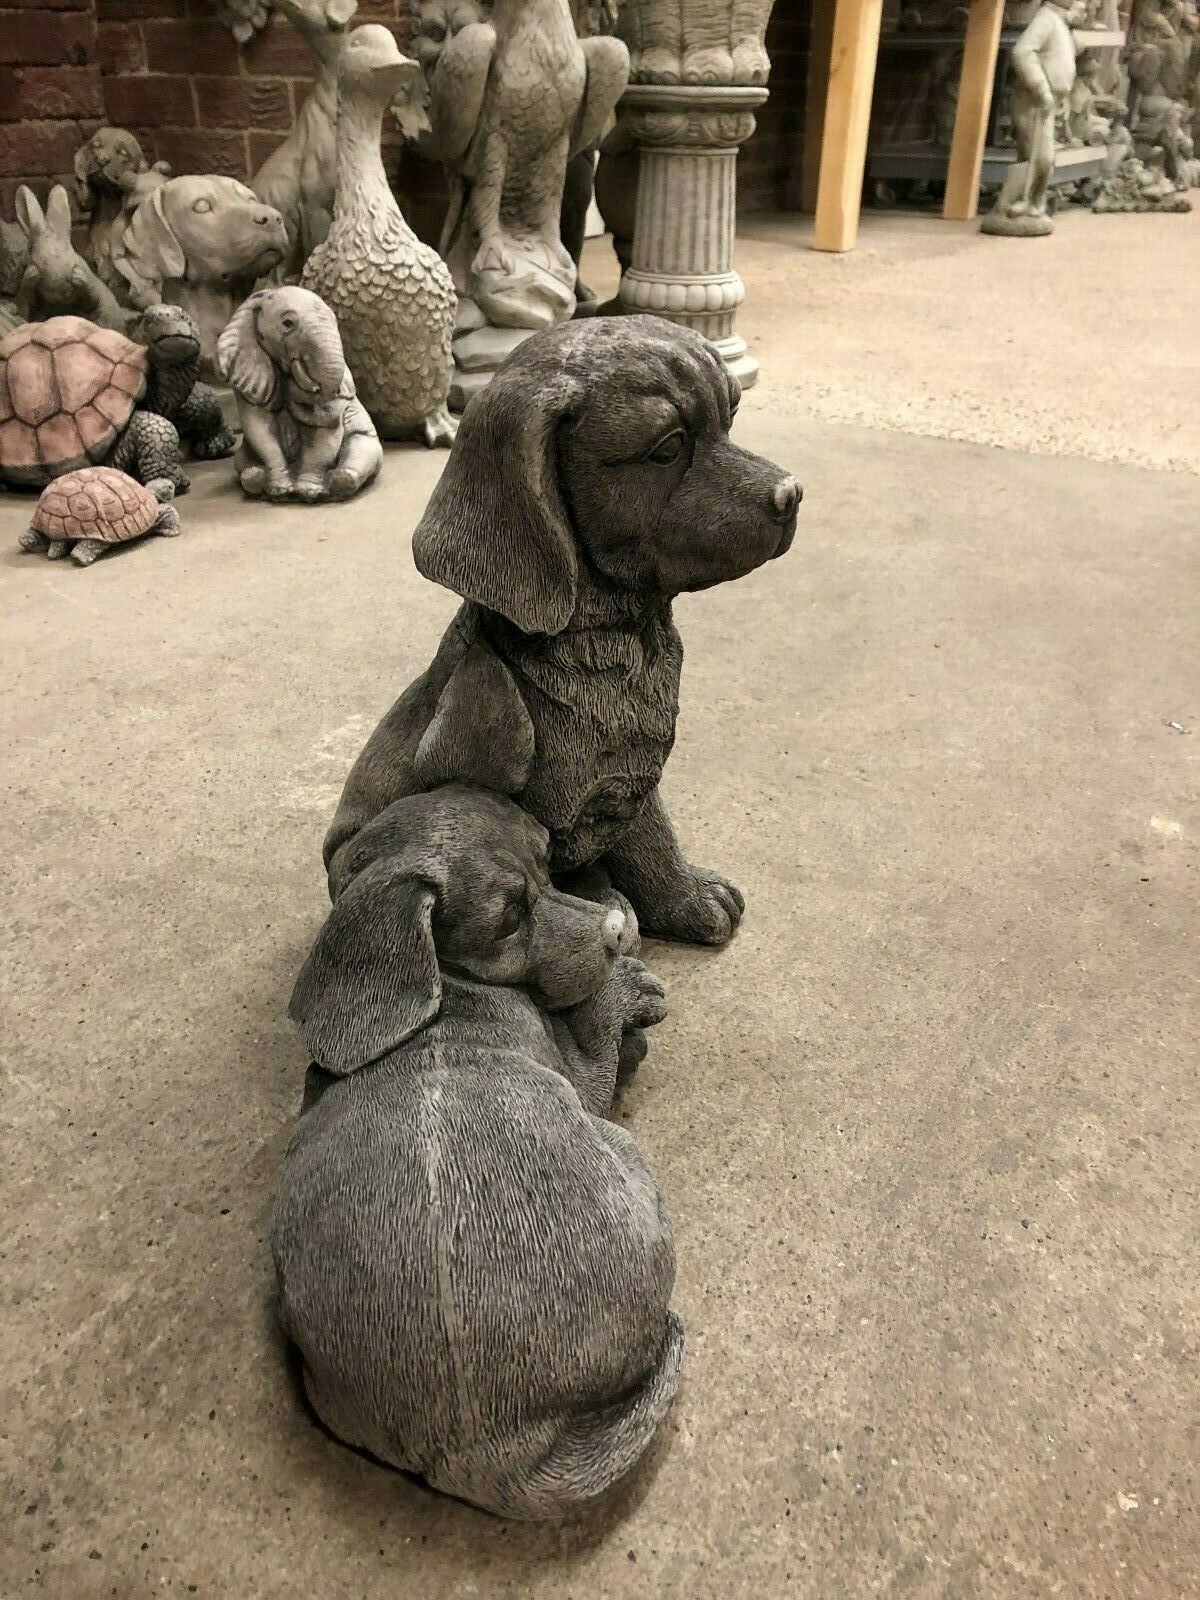 Pair of Stone Labrador Dog Ornaments